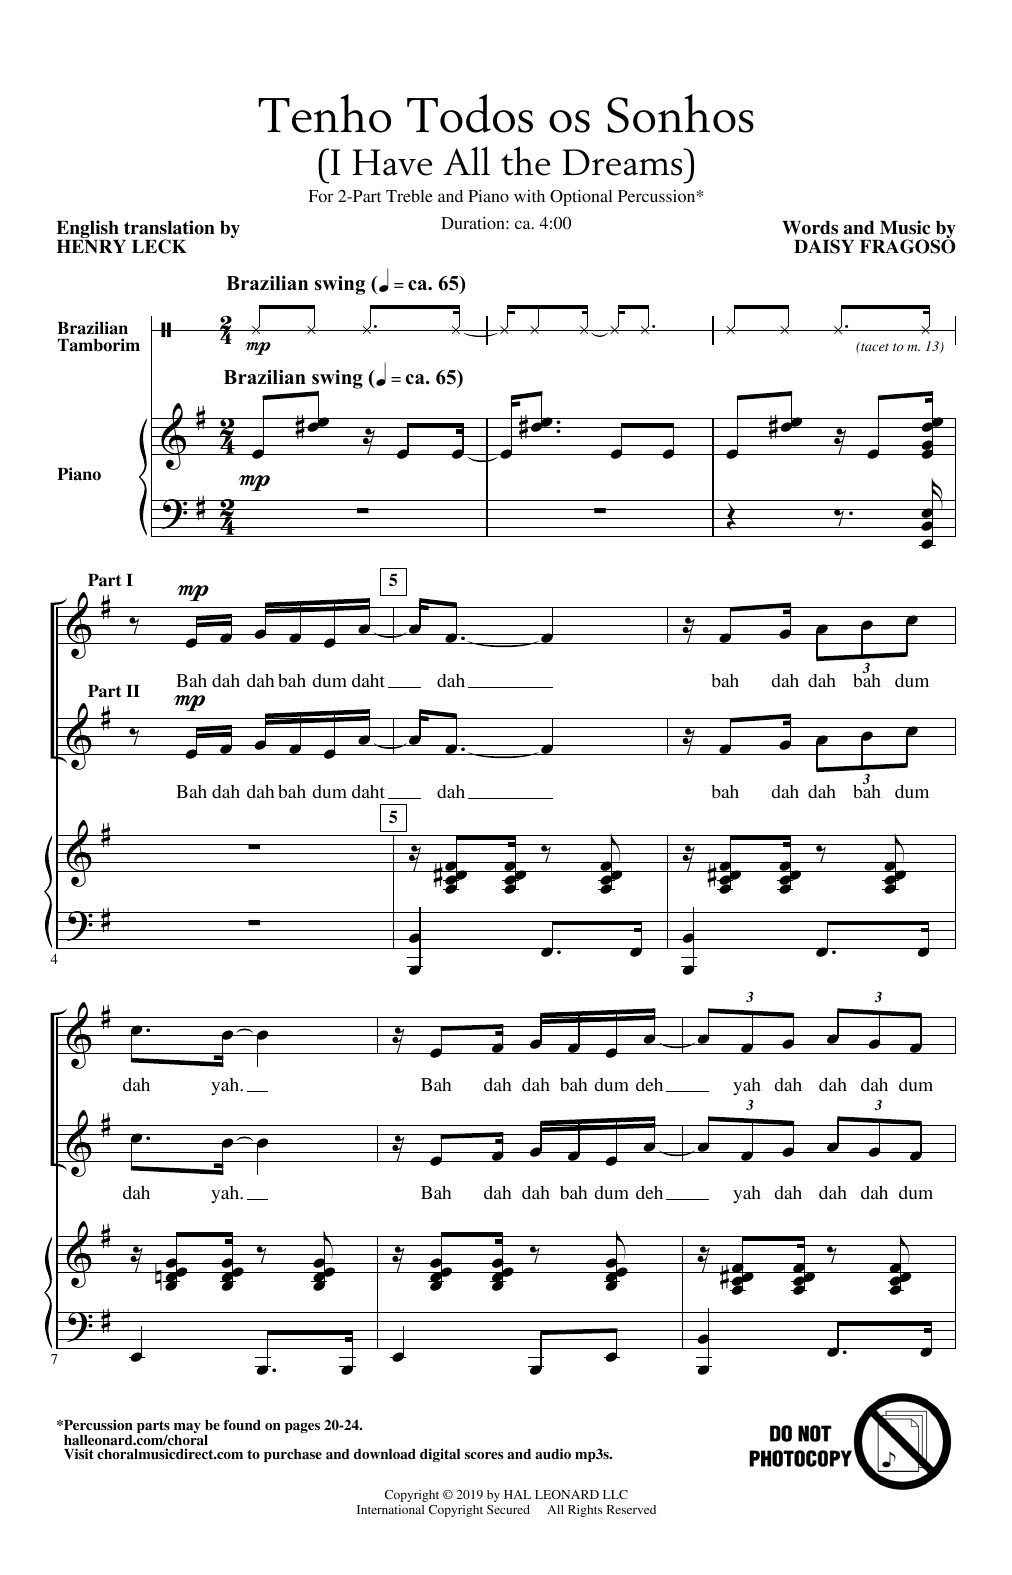 Daisy Fragoso Tenho Todos Os Sonhos (I Have All the Dreams) sheet music notes and chords arranged for 2-Part Choir